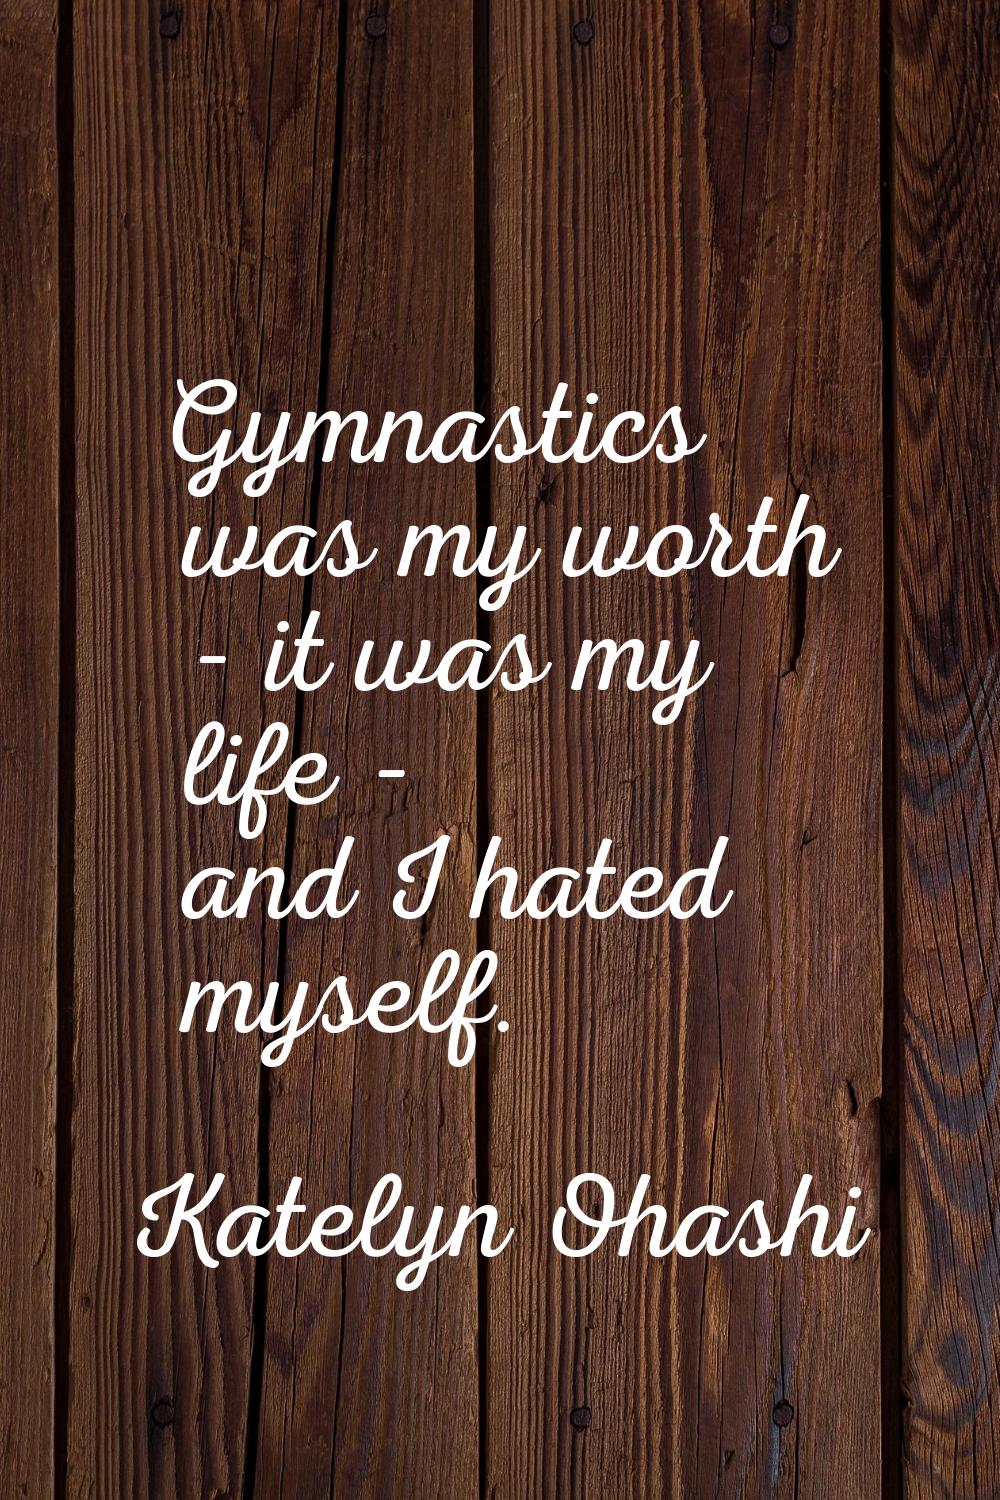 Gymnastics was my worth - it was my life - and I hated myself.